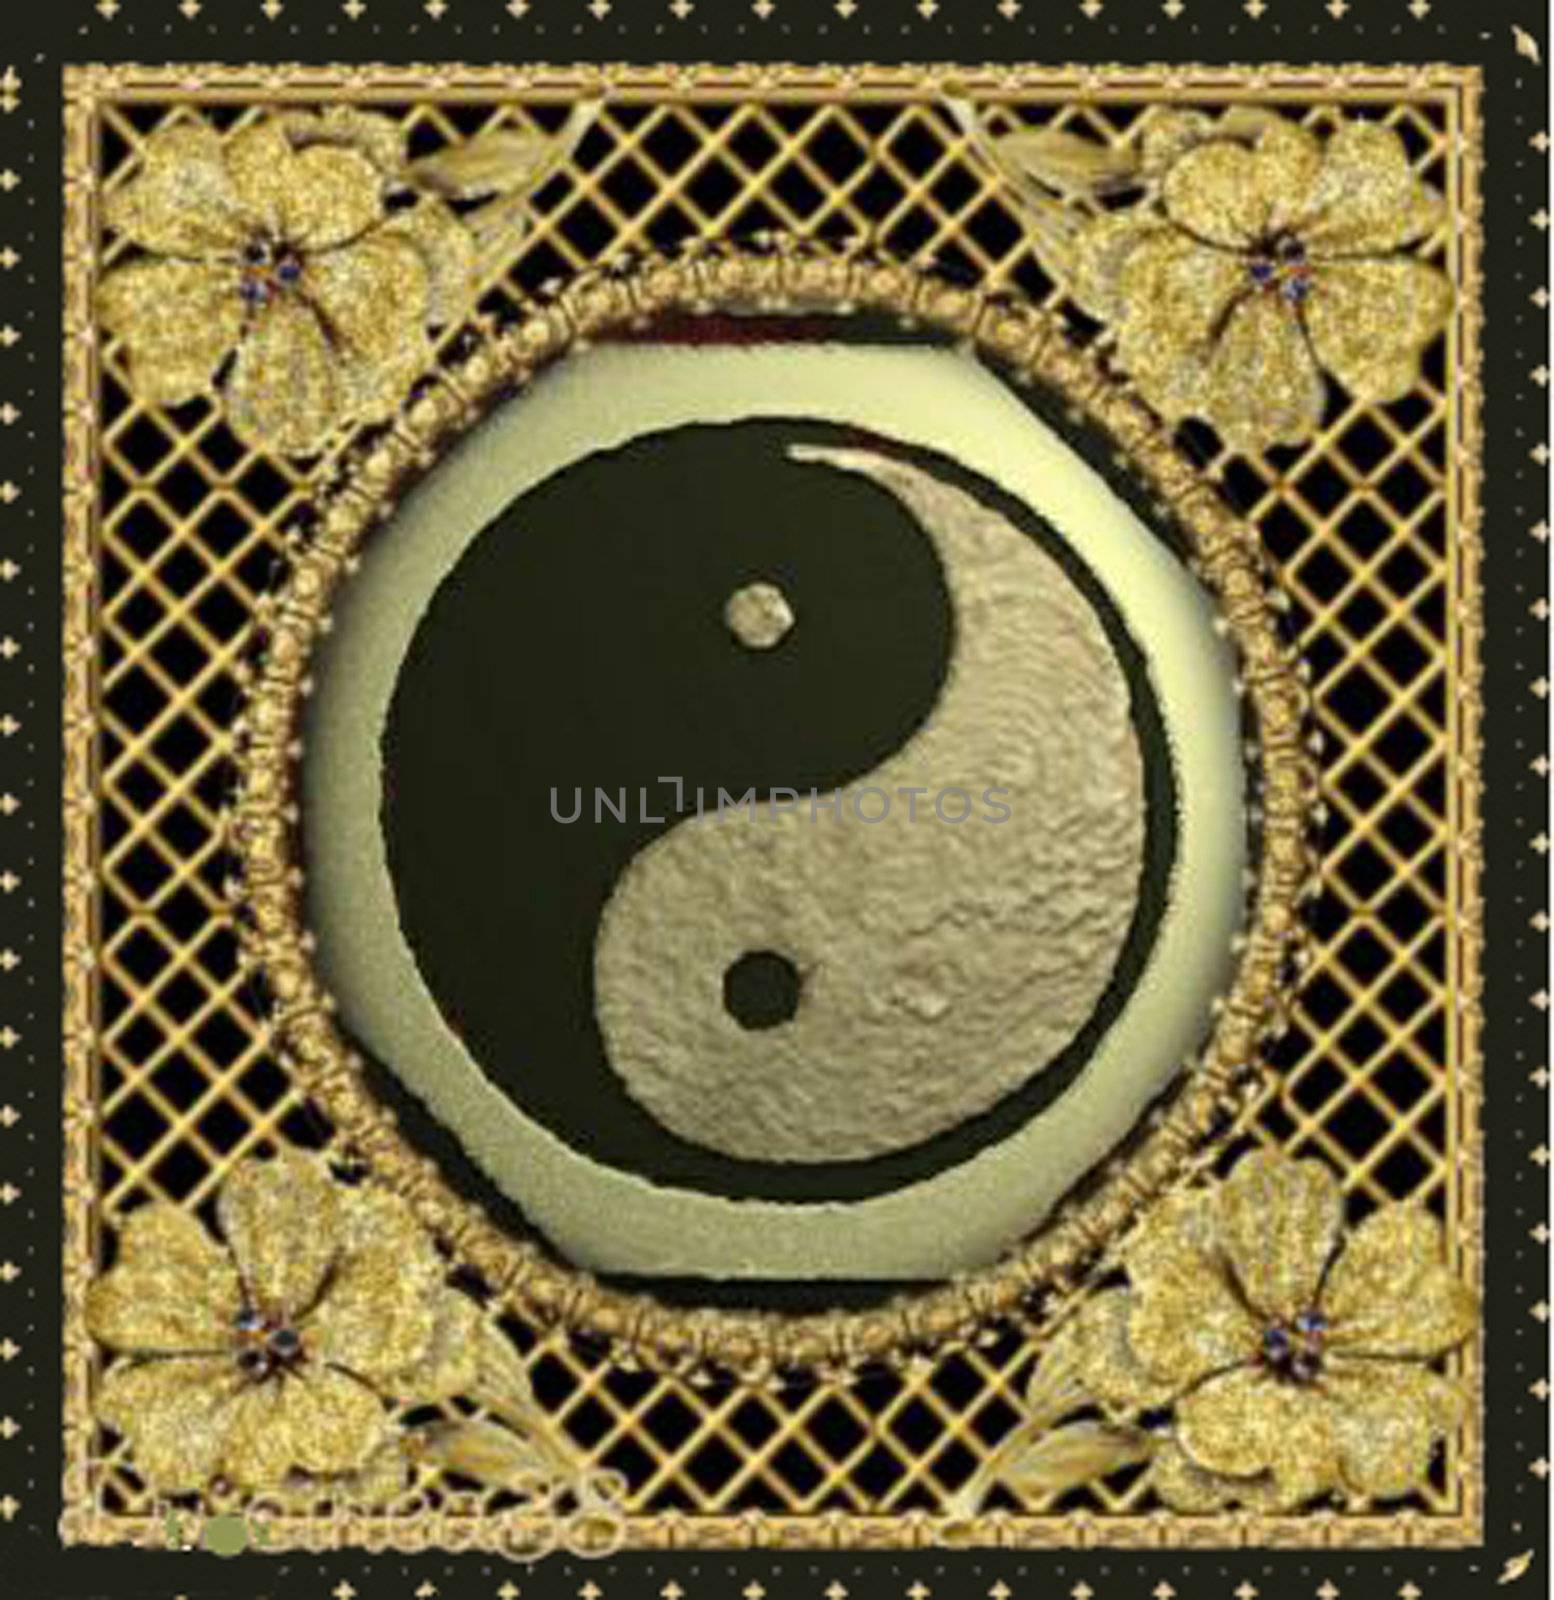 Golden Ying Yang Symbol on background